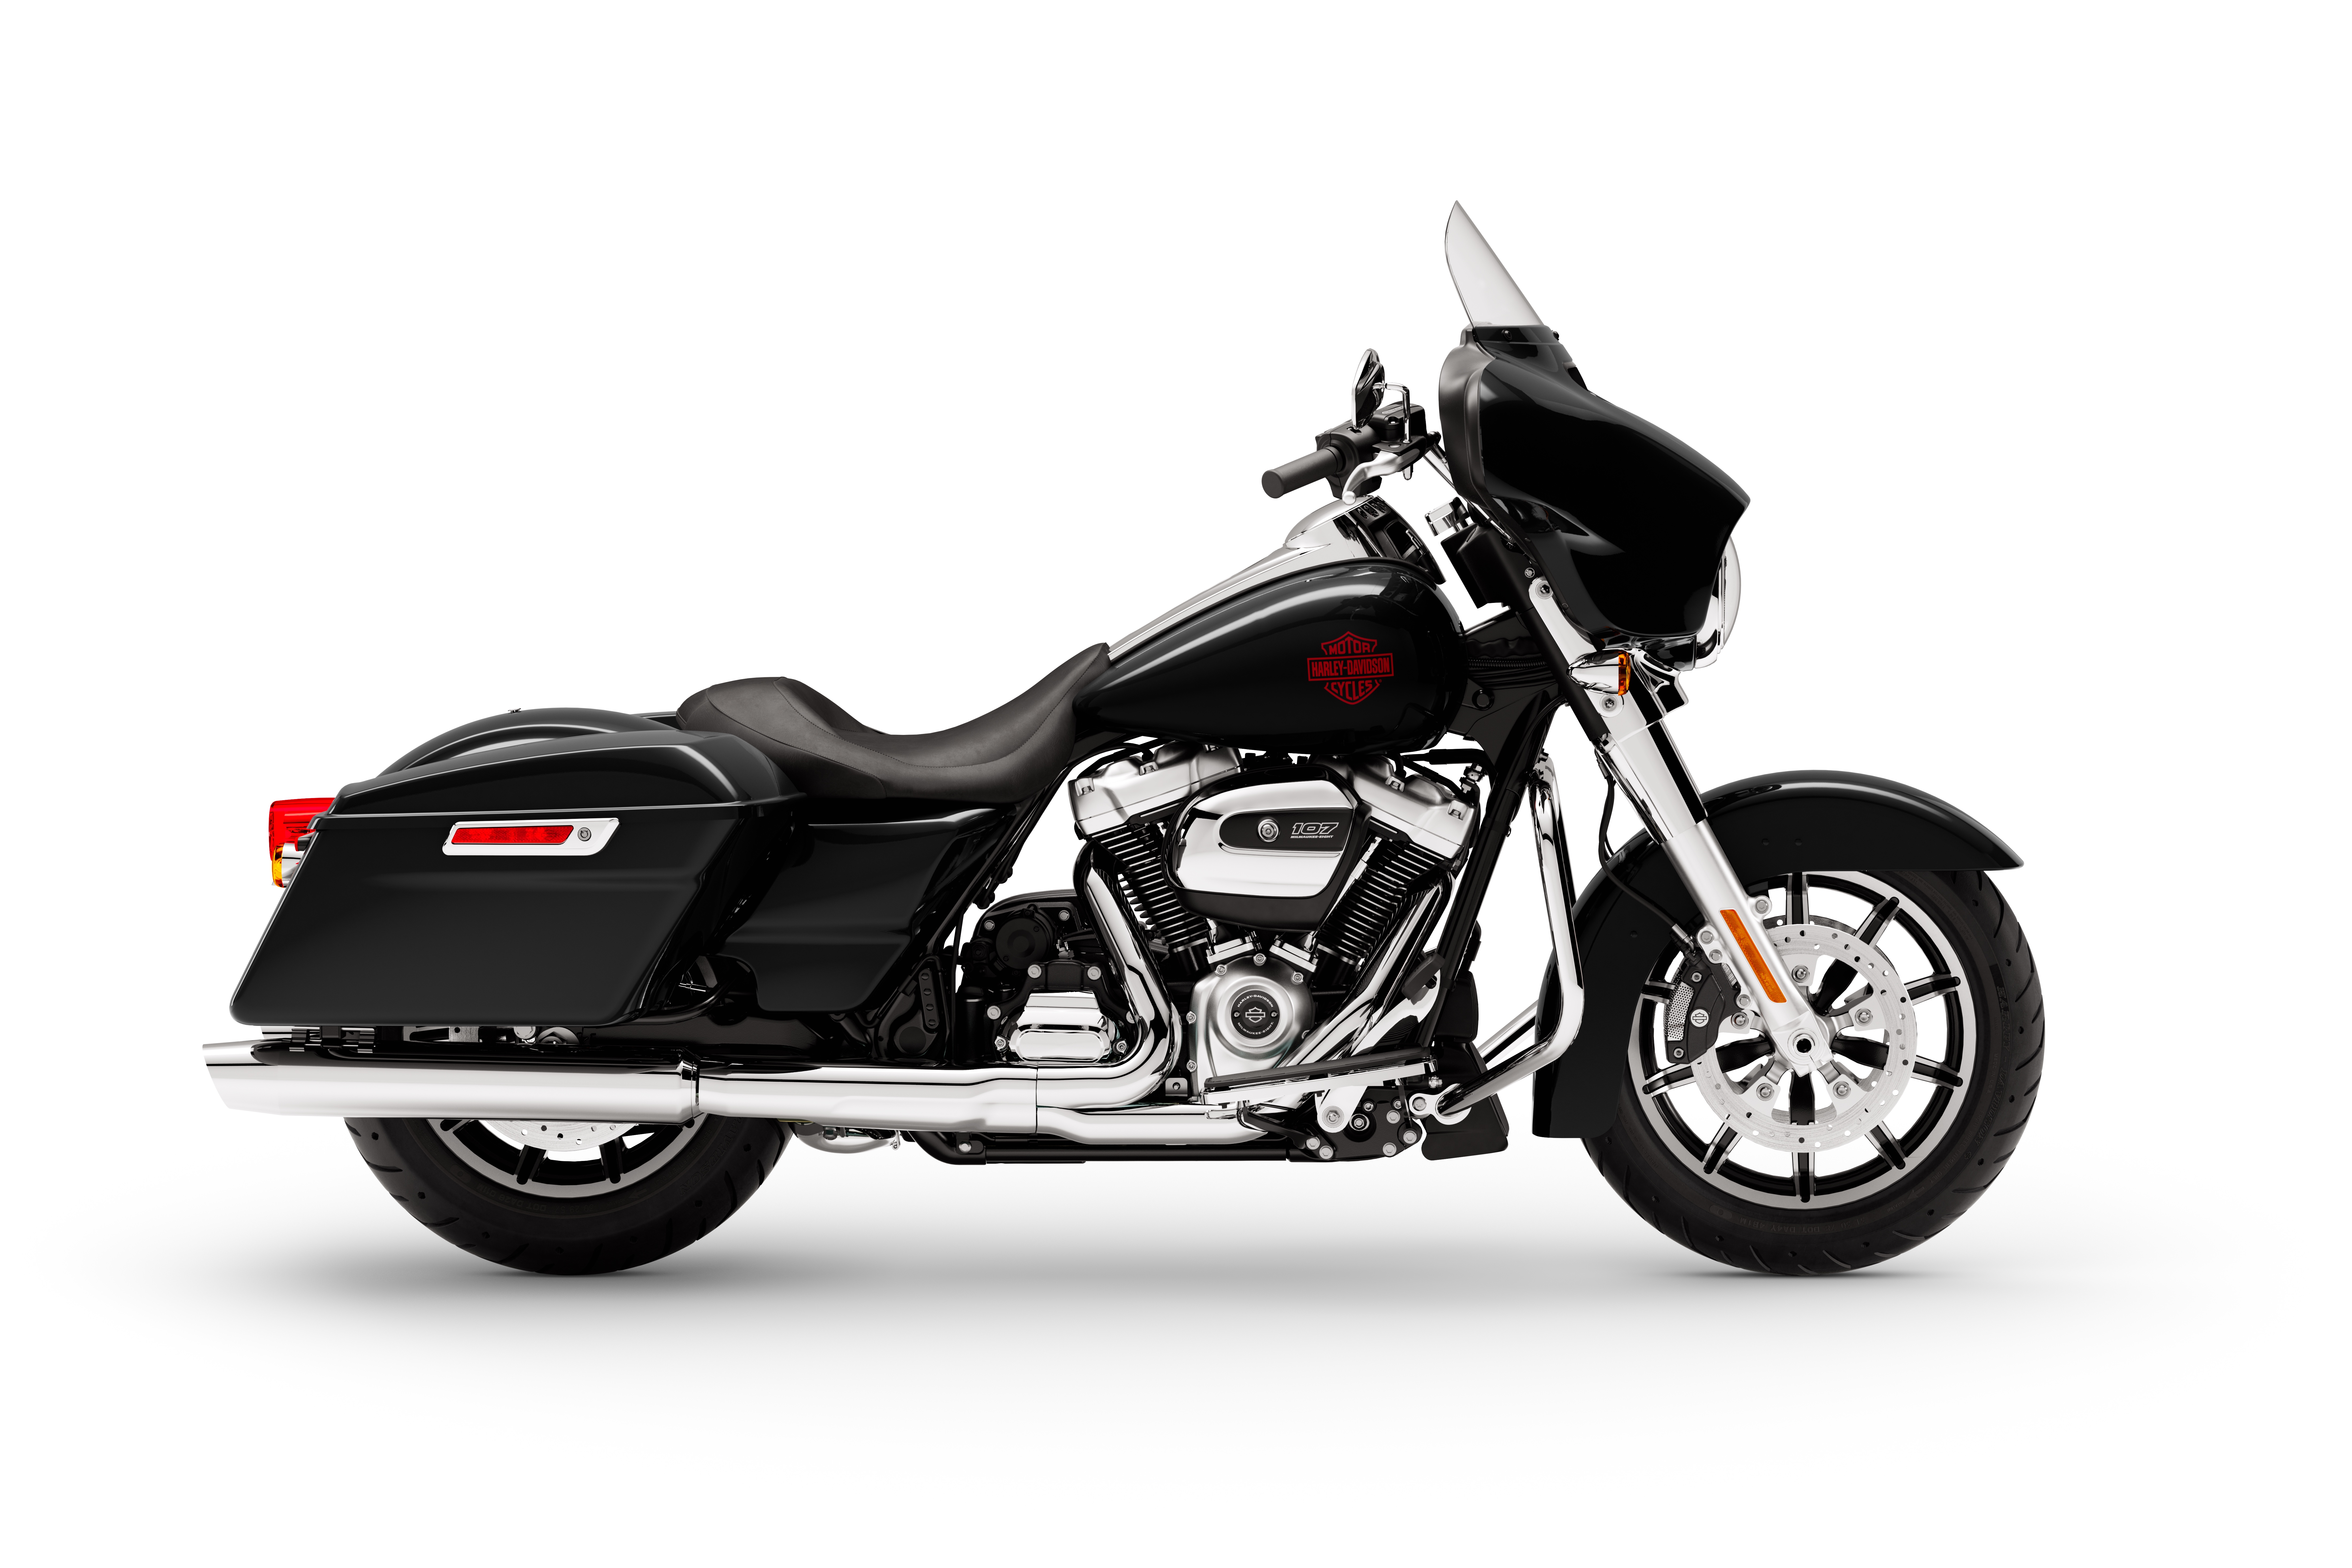 2020 Harley-Davidson Electra Glide Standard Buyer's Guide: Specs